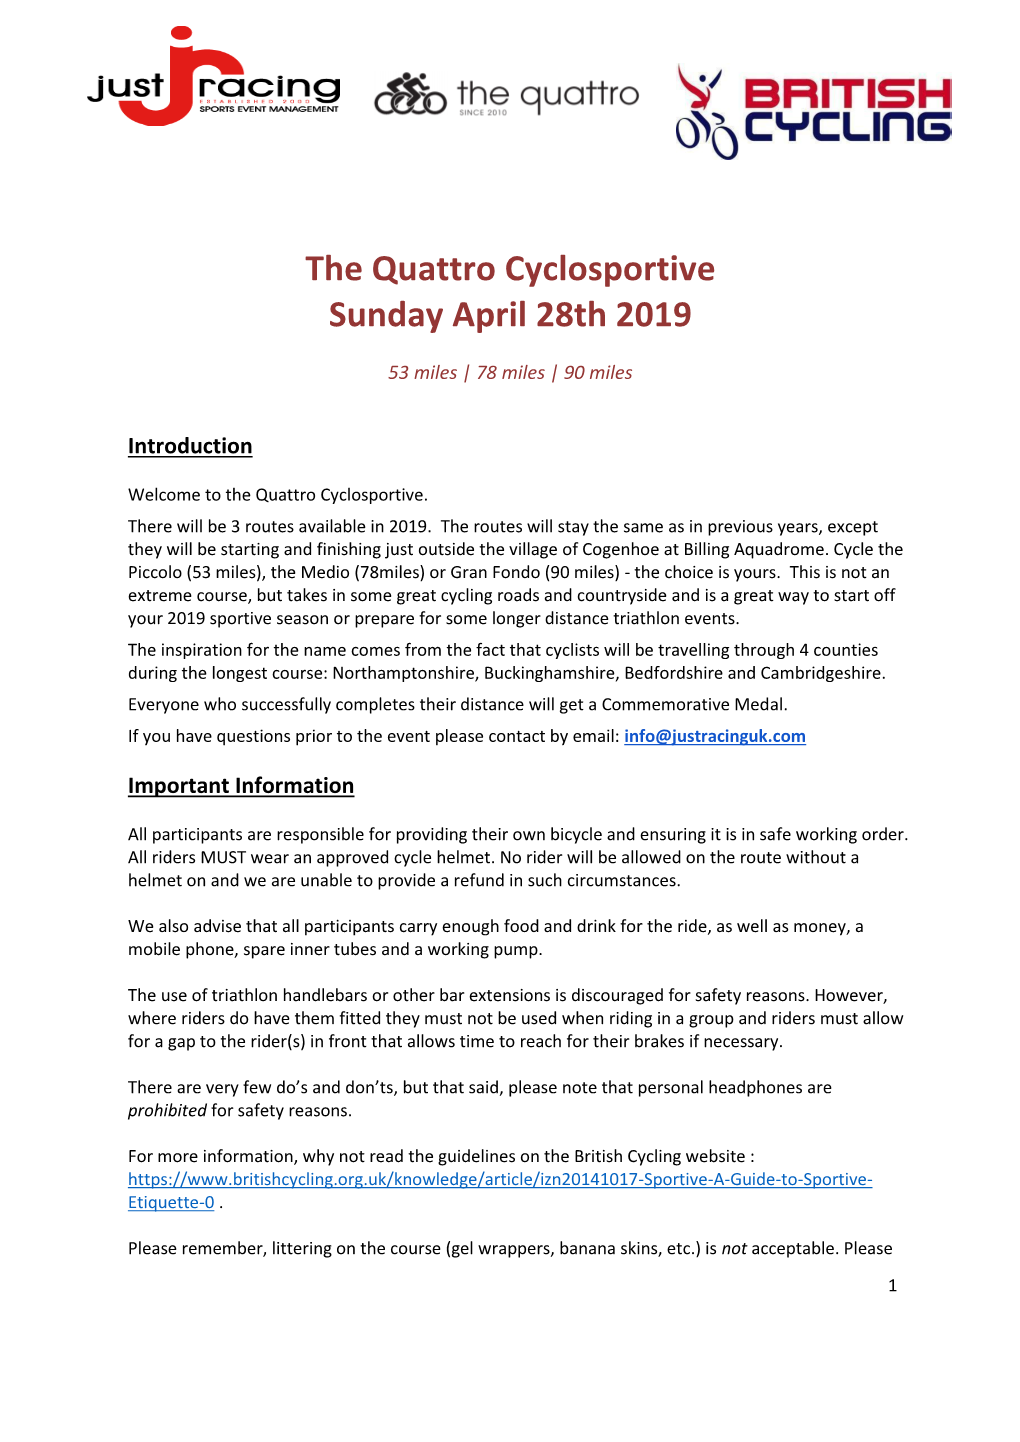 The Quattro Cyclosportive Sunday April 28Th 2019